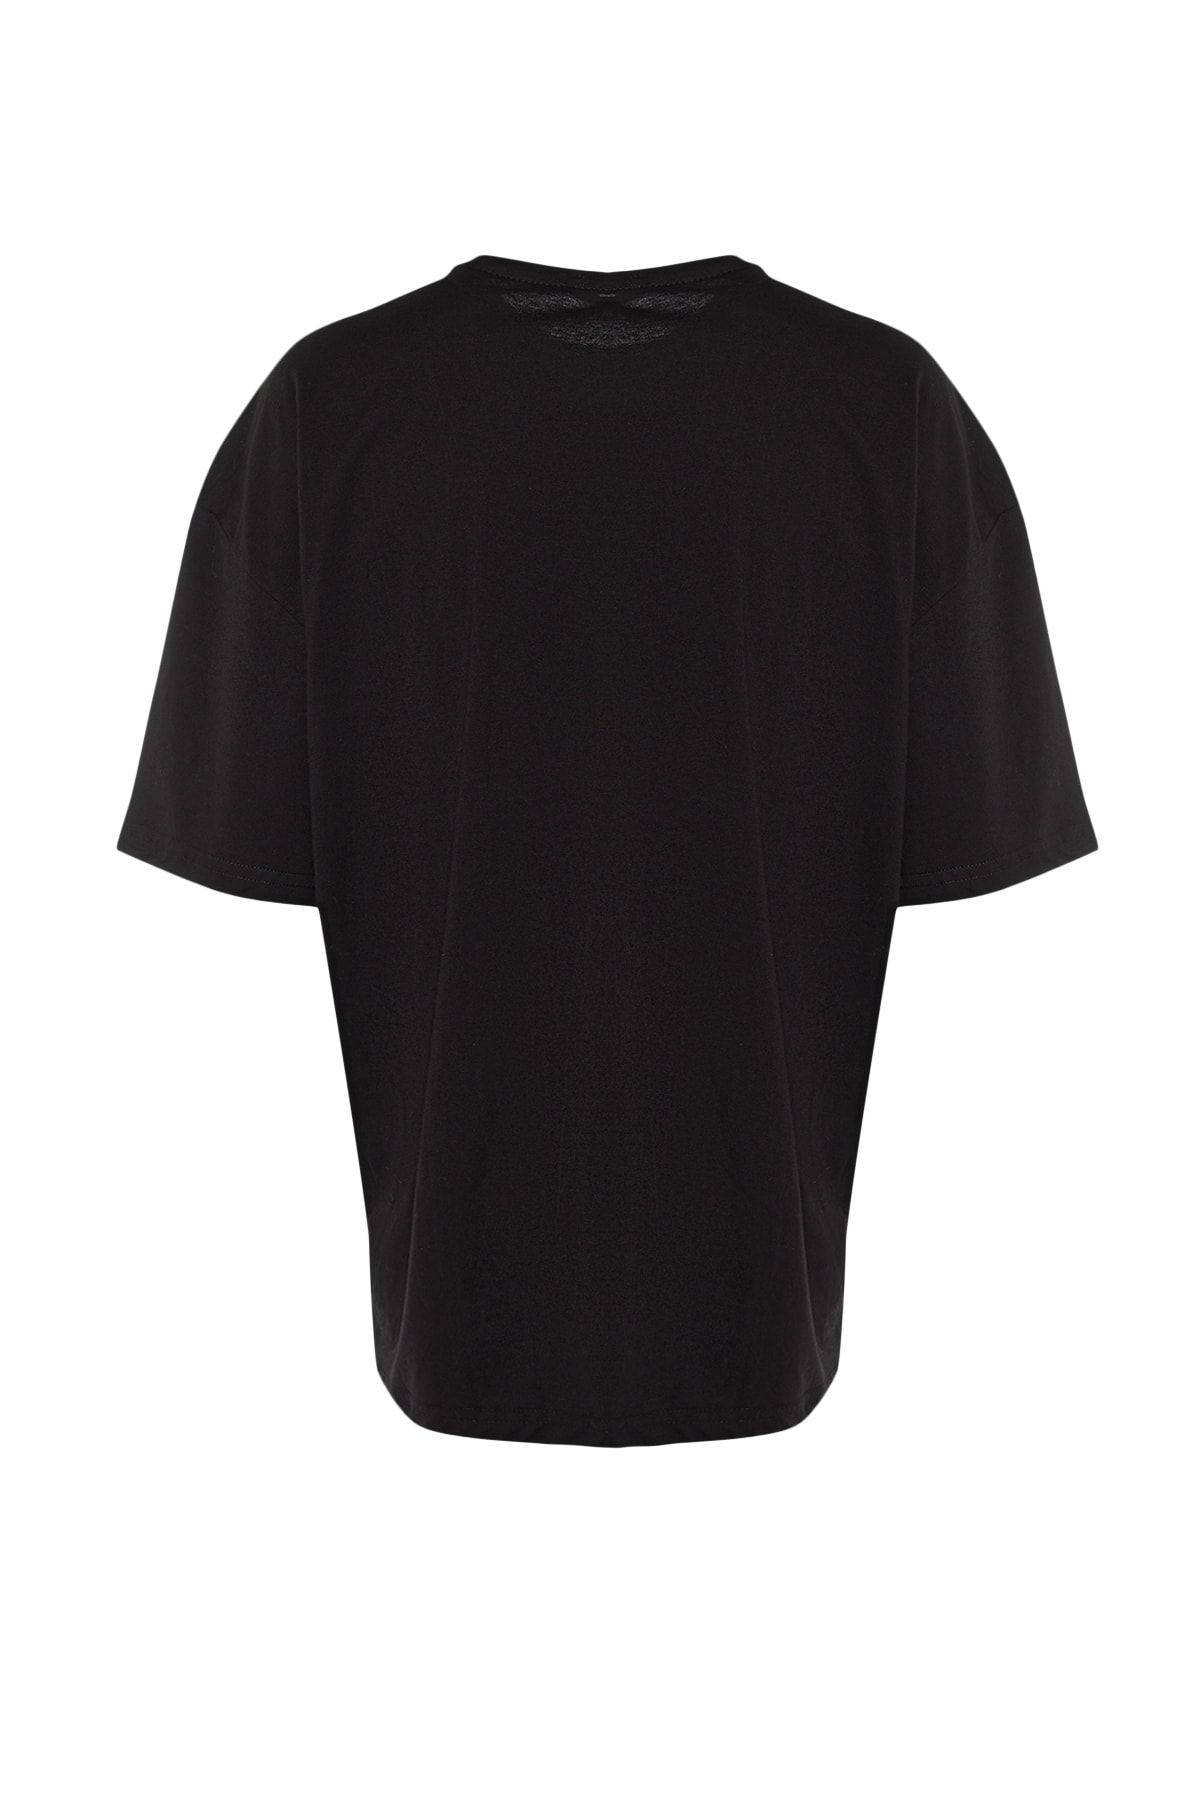 Trendyol Collection Men's Black Oversize/Wide Cut Basic 100% Cotton T ...